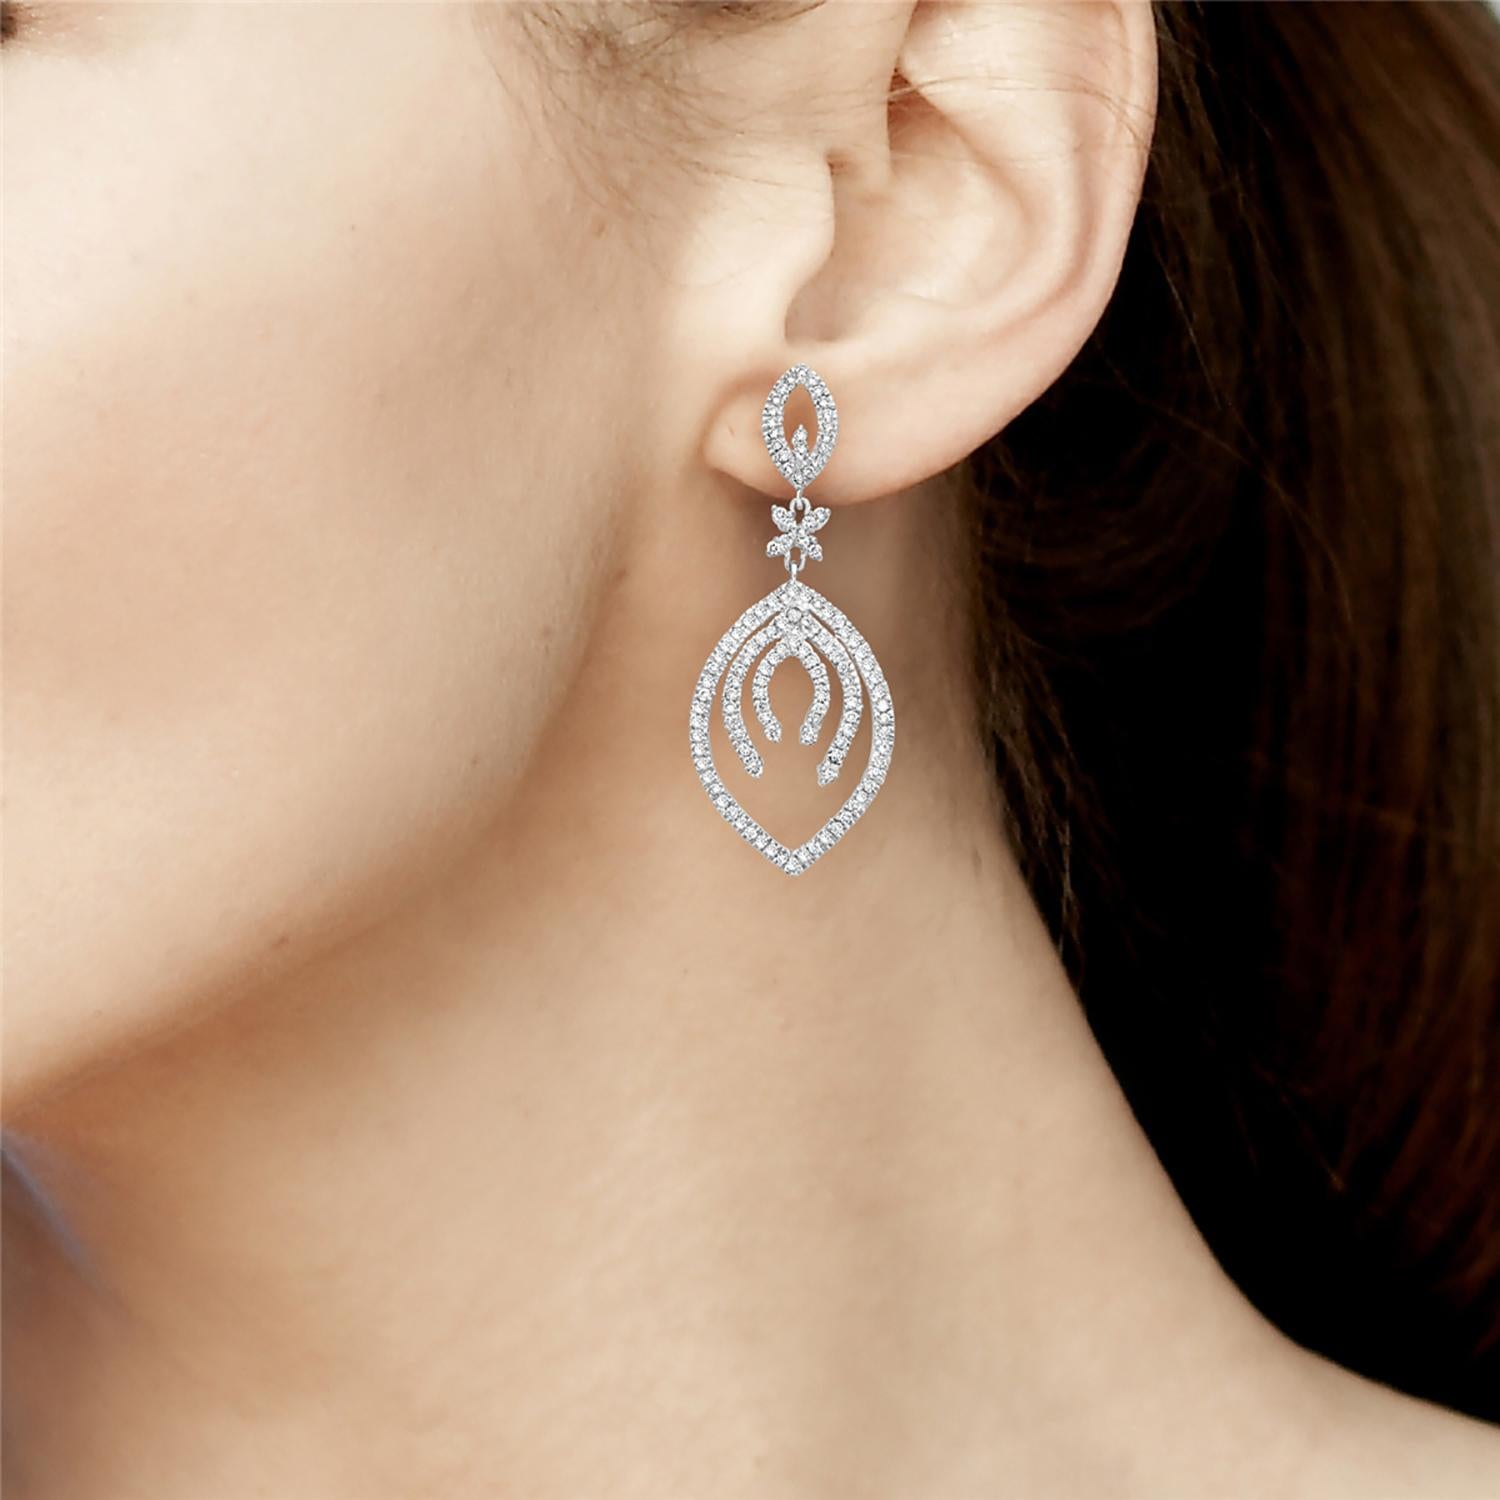 Luxury at its finest, these stunning teardrop shaped dangle earrings feature brilliant cut diamonds set in 18k white gold. Each earring boasts a breathtaking design,

18KT:9.5g; 
Diamond:3.79ct,